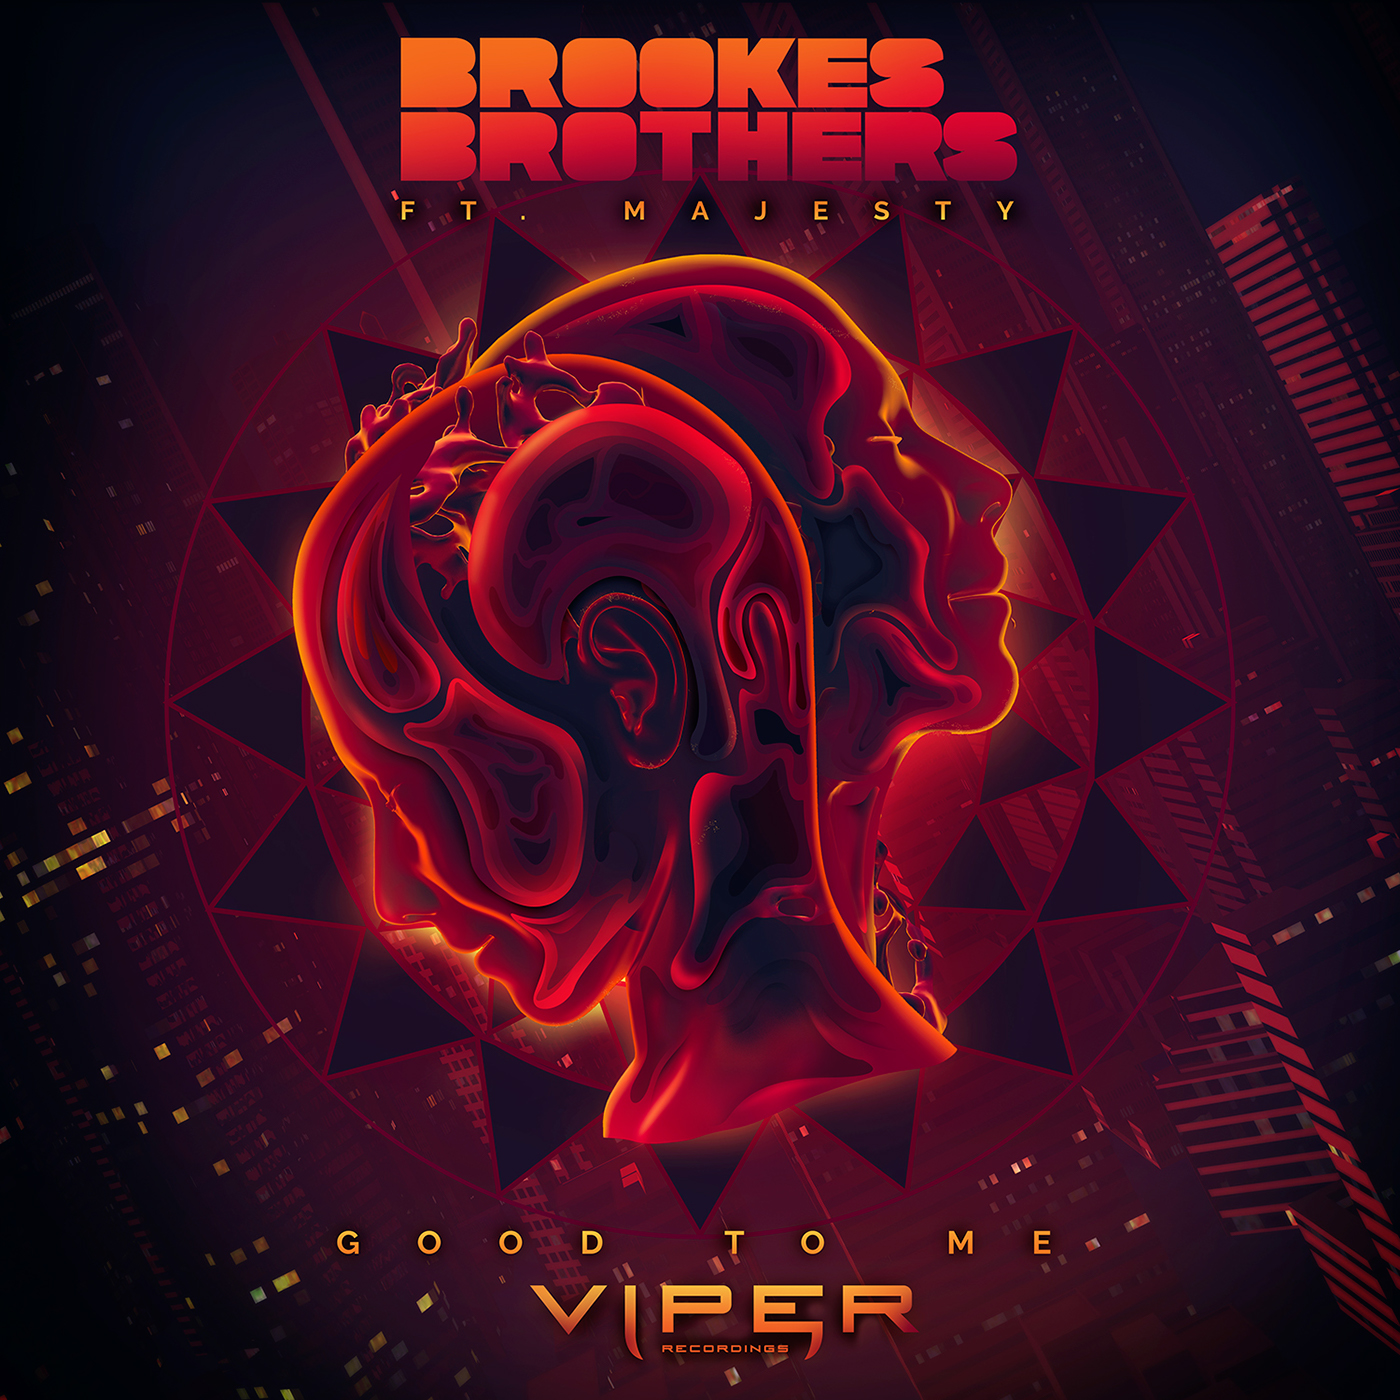 brookes brothers drum and bass Viper Recordings DnB Album artwork koyn